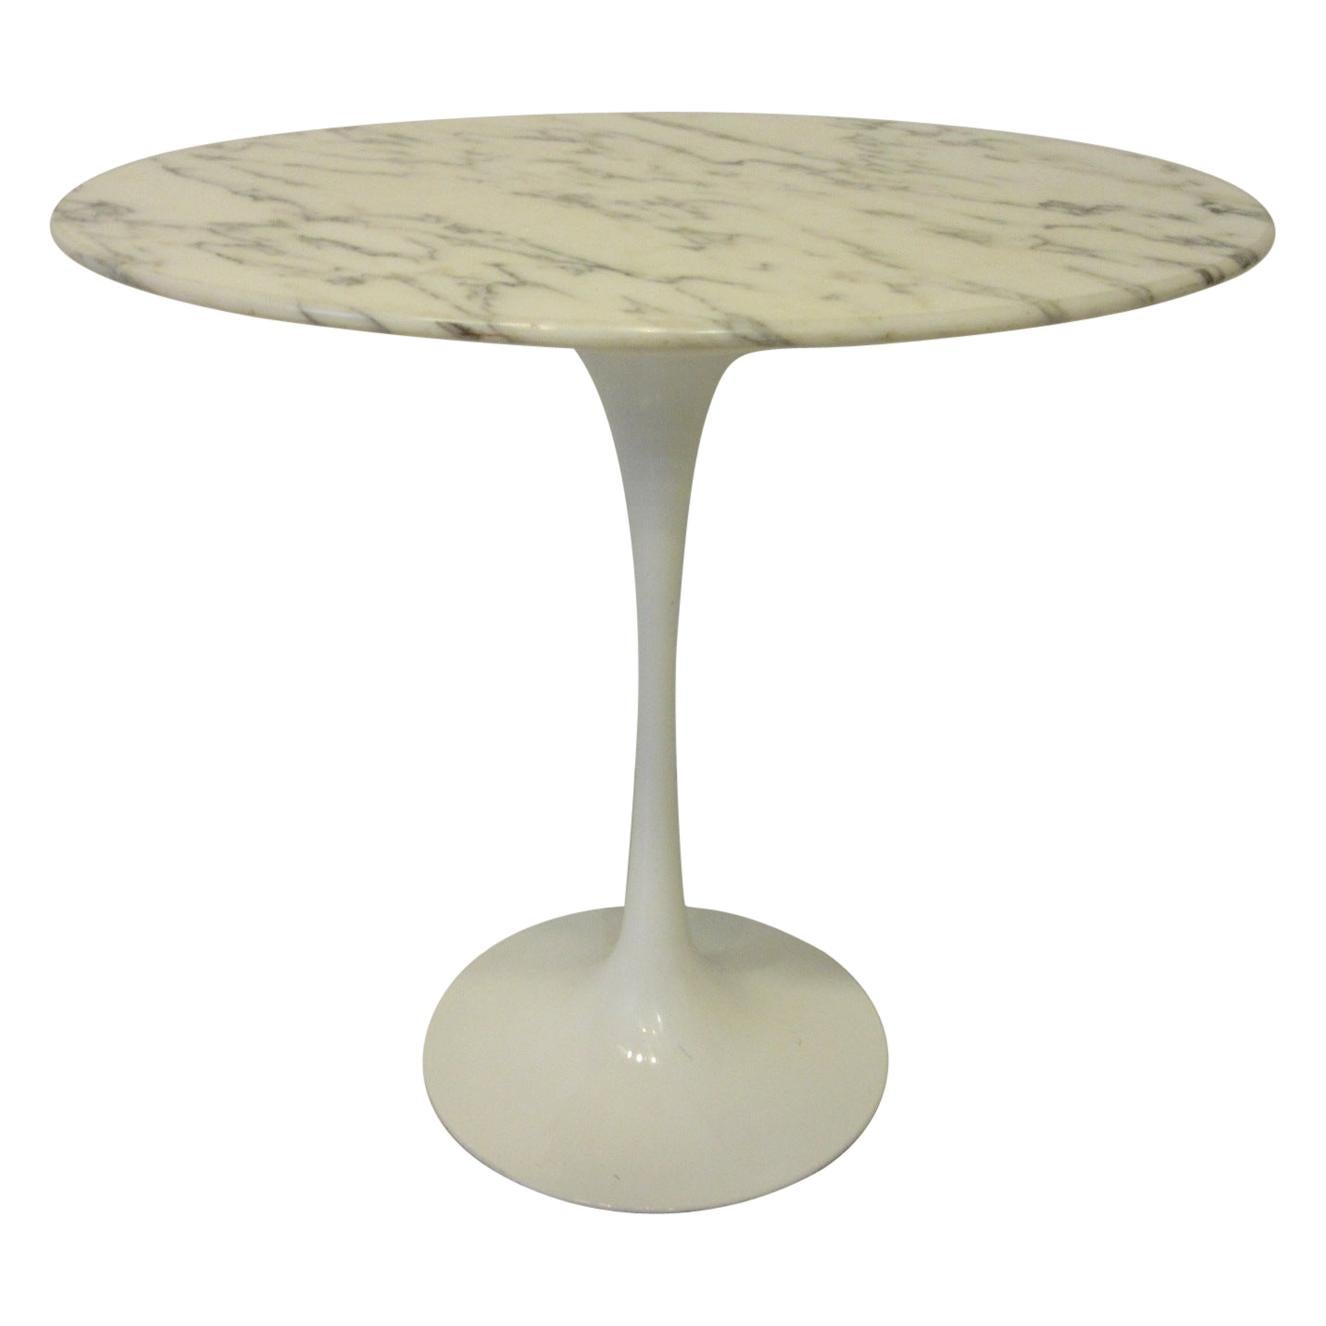 Eero Saarinen Oval Marble Tulip Side Table for Knoll